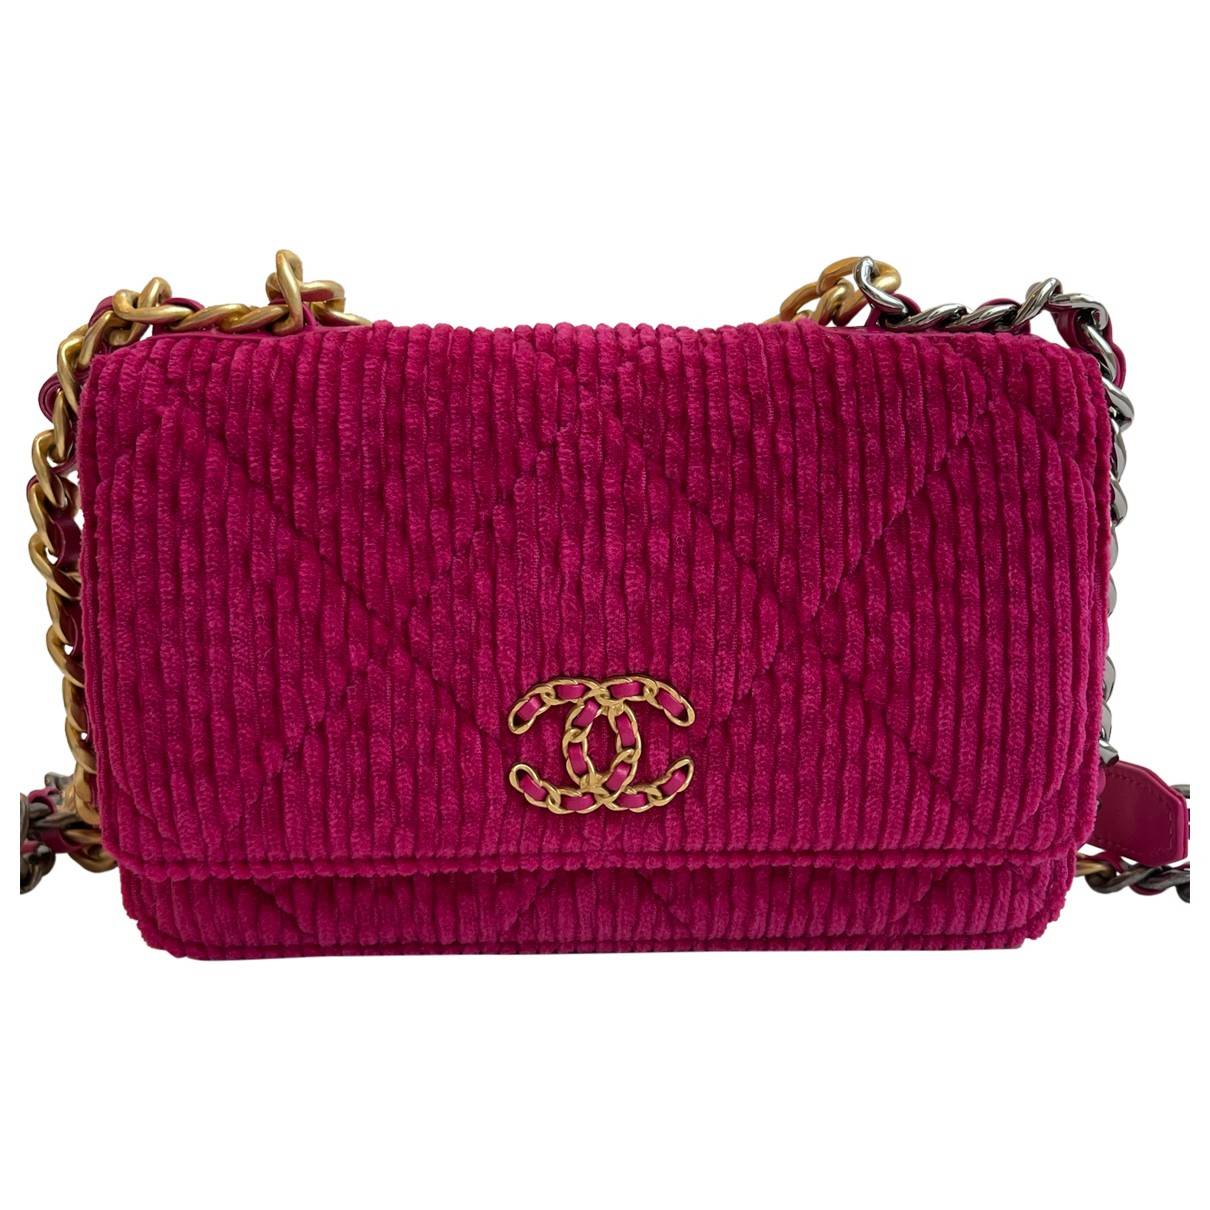 Chanel - Authenticated Wallet on Chain Chanel 19 Handbag - Velvet Pink Plain for Women, Never Worn